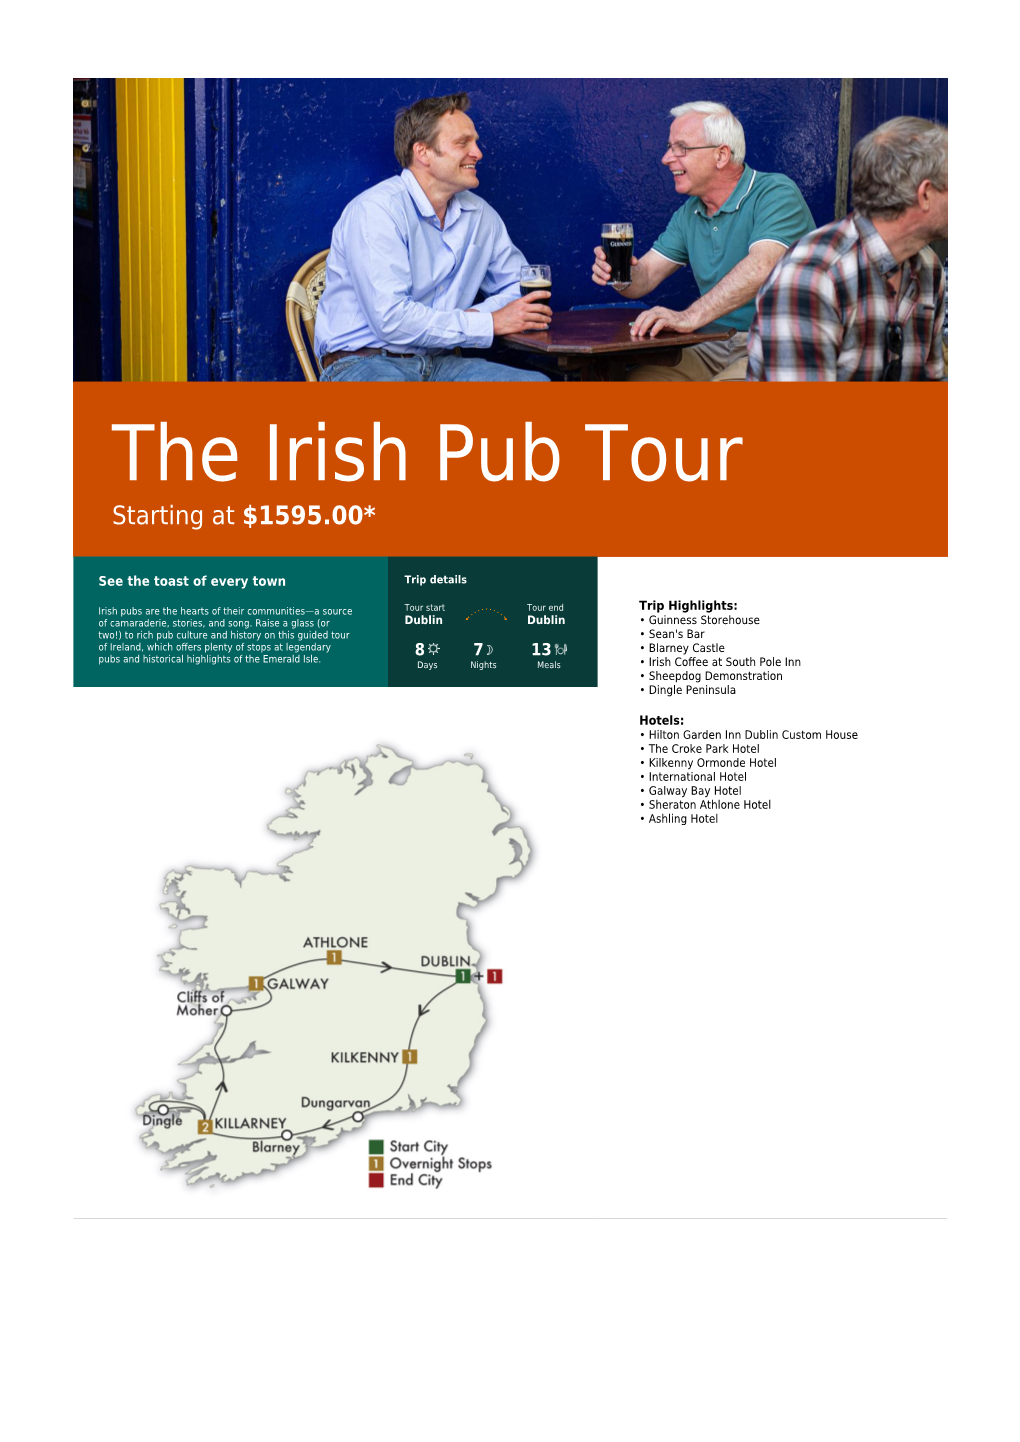 The Irish Pub Tour Starting at $1595.00*